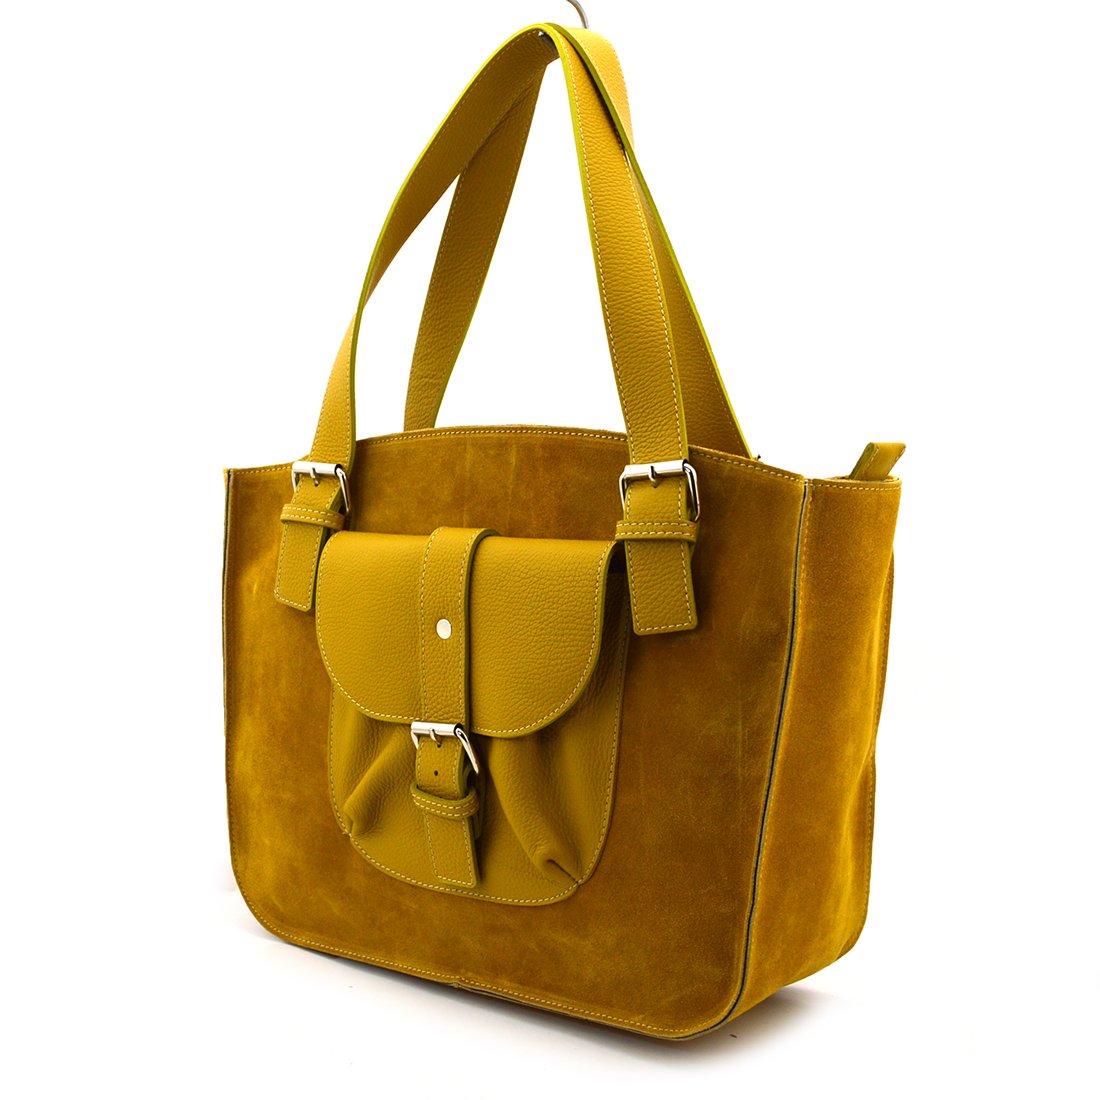 vp692 żółty  Pojemna shopperbag, naturalna skóra zamszowa+skóra dolaro NOWOŚĆ